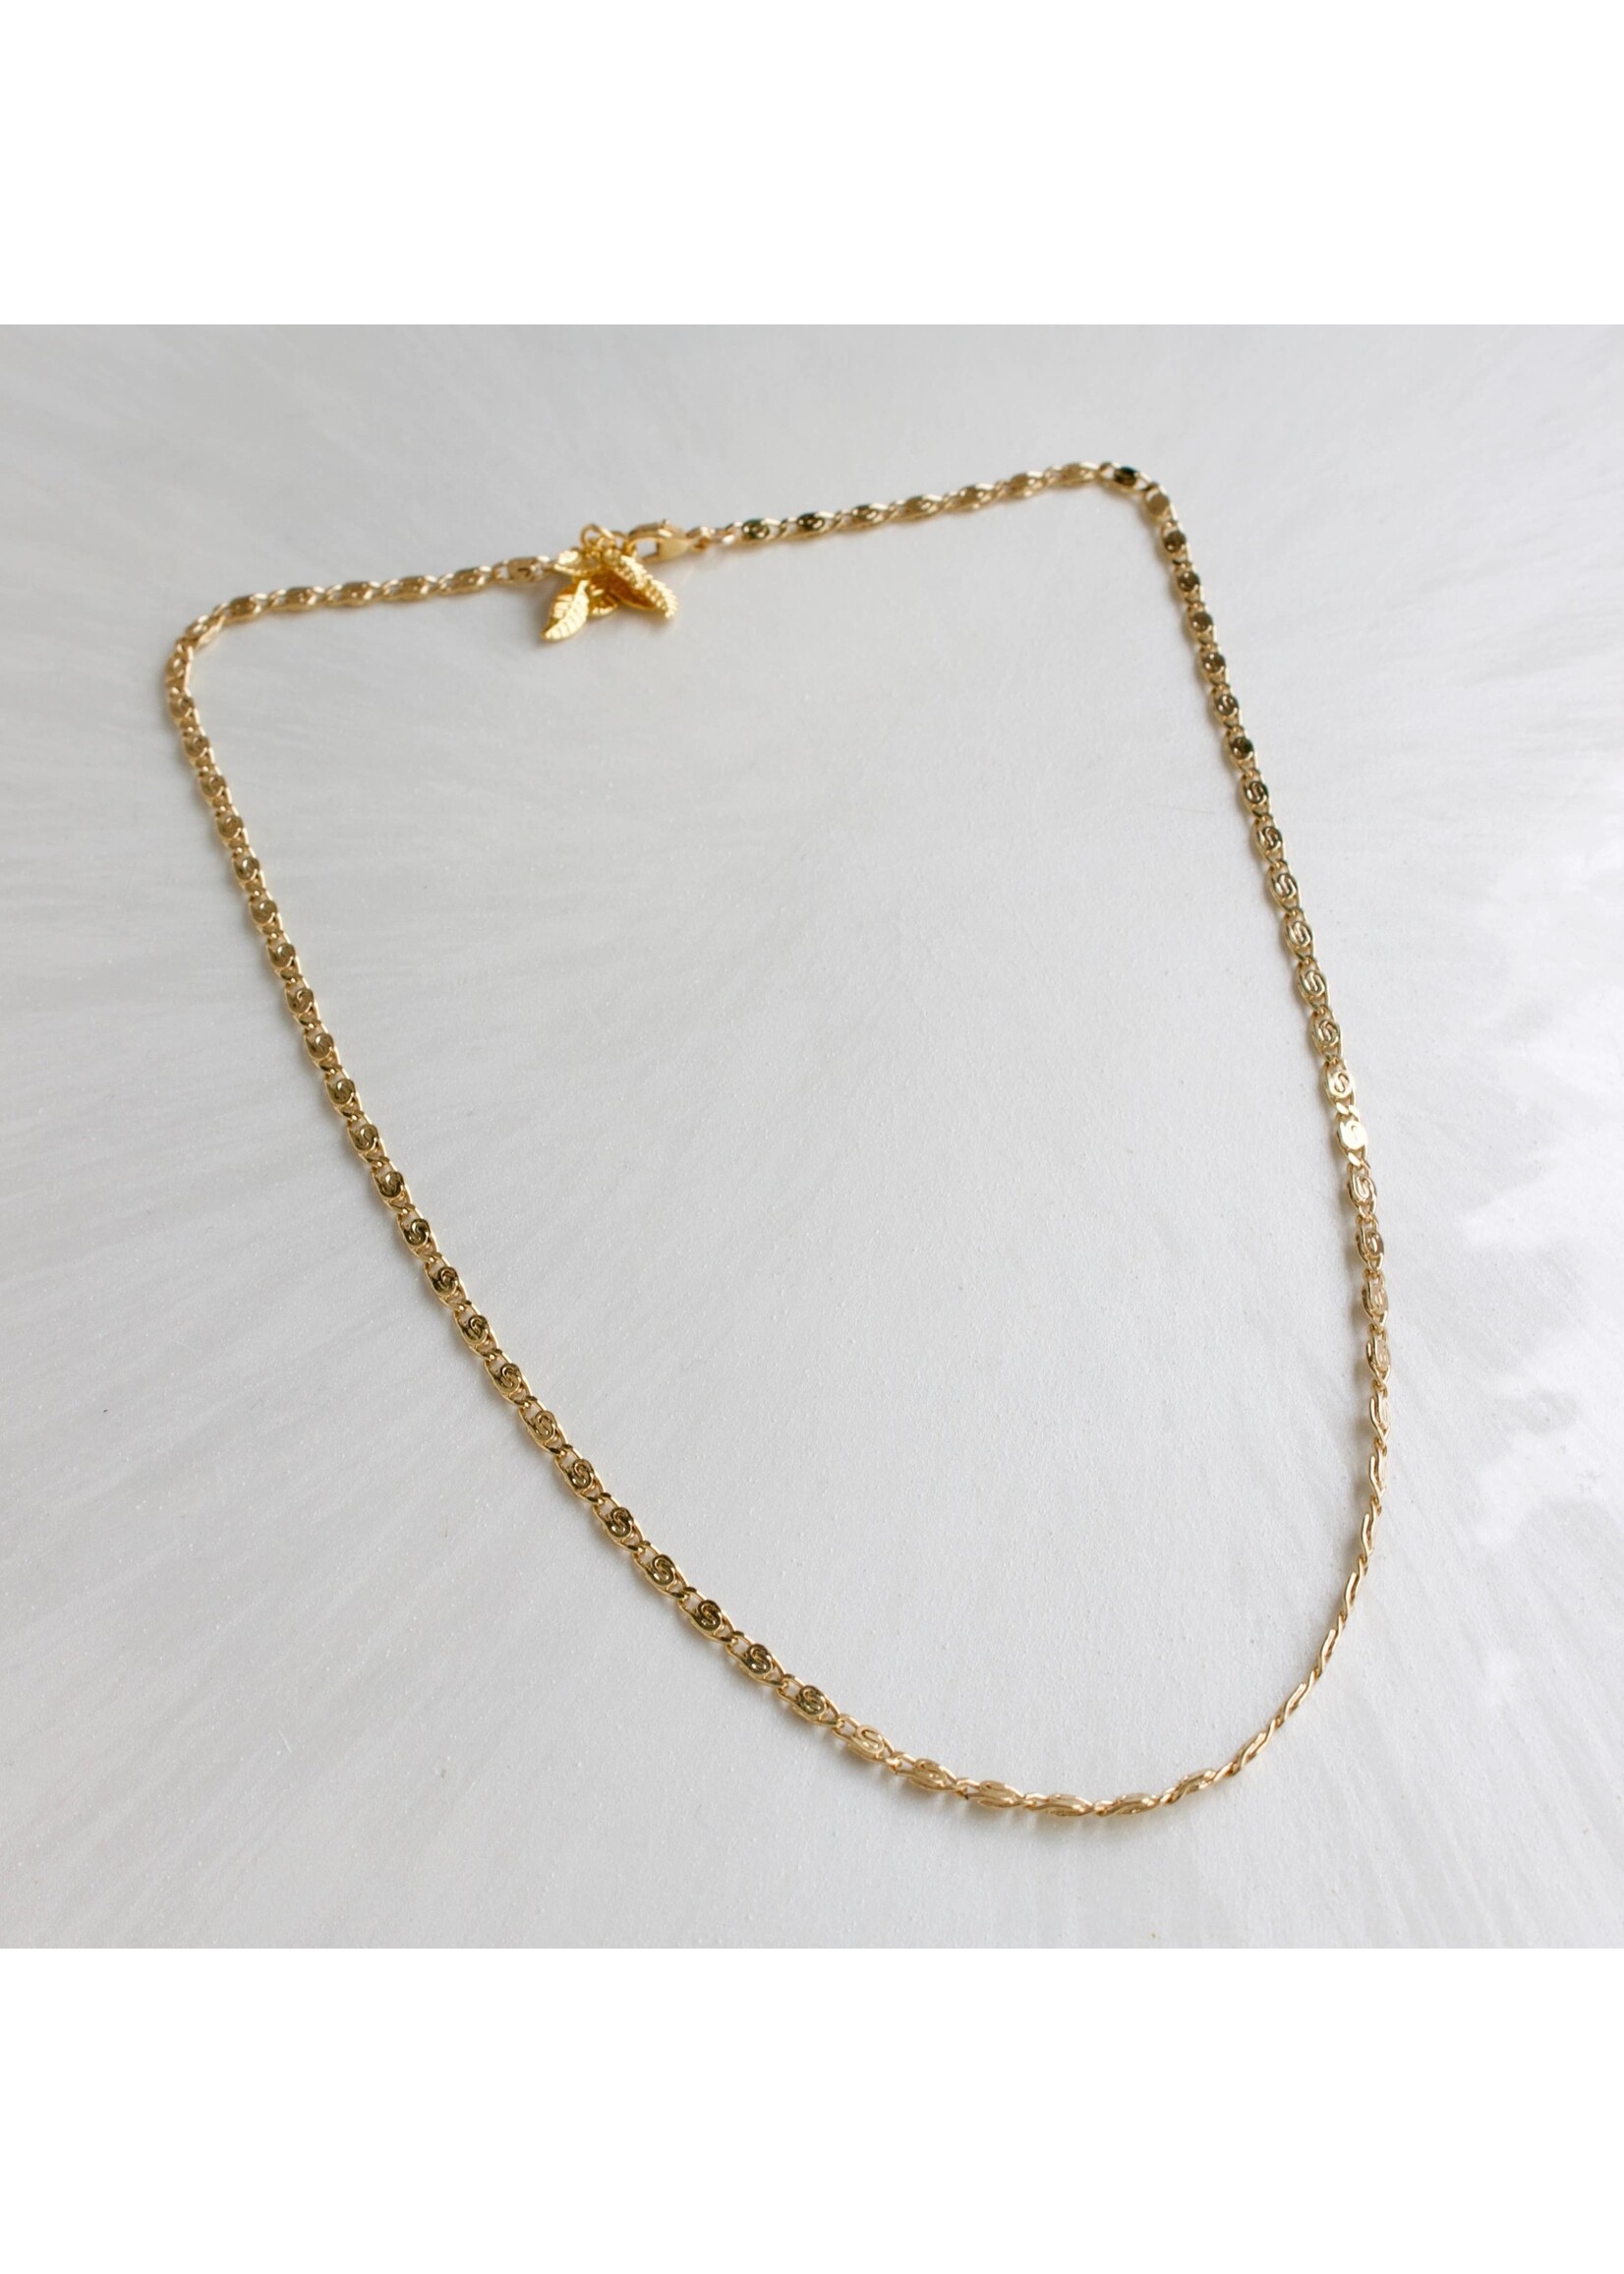 Caroline Ornate Gold Necklace